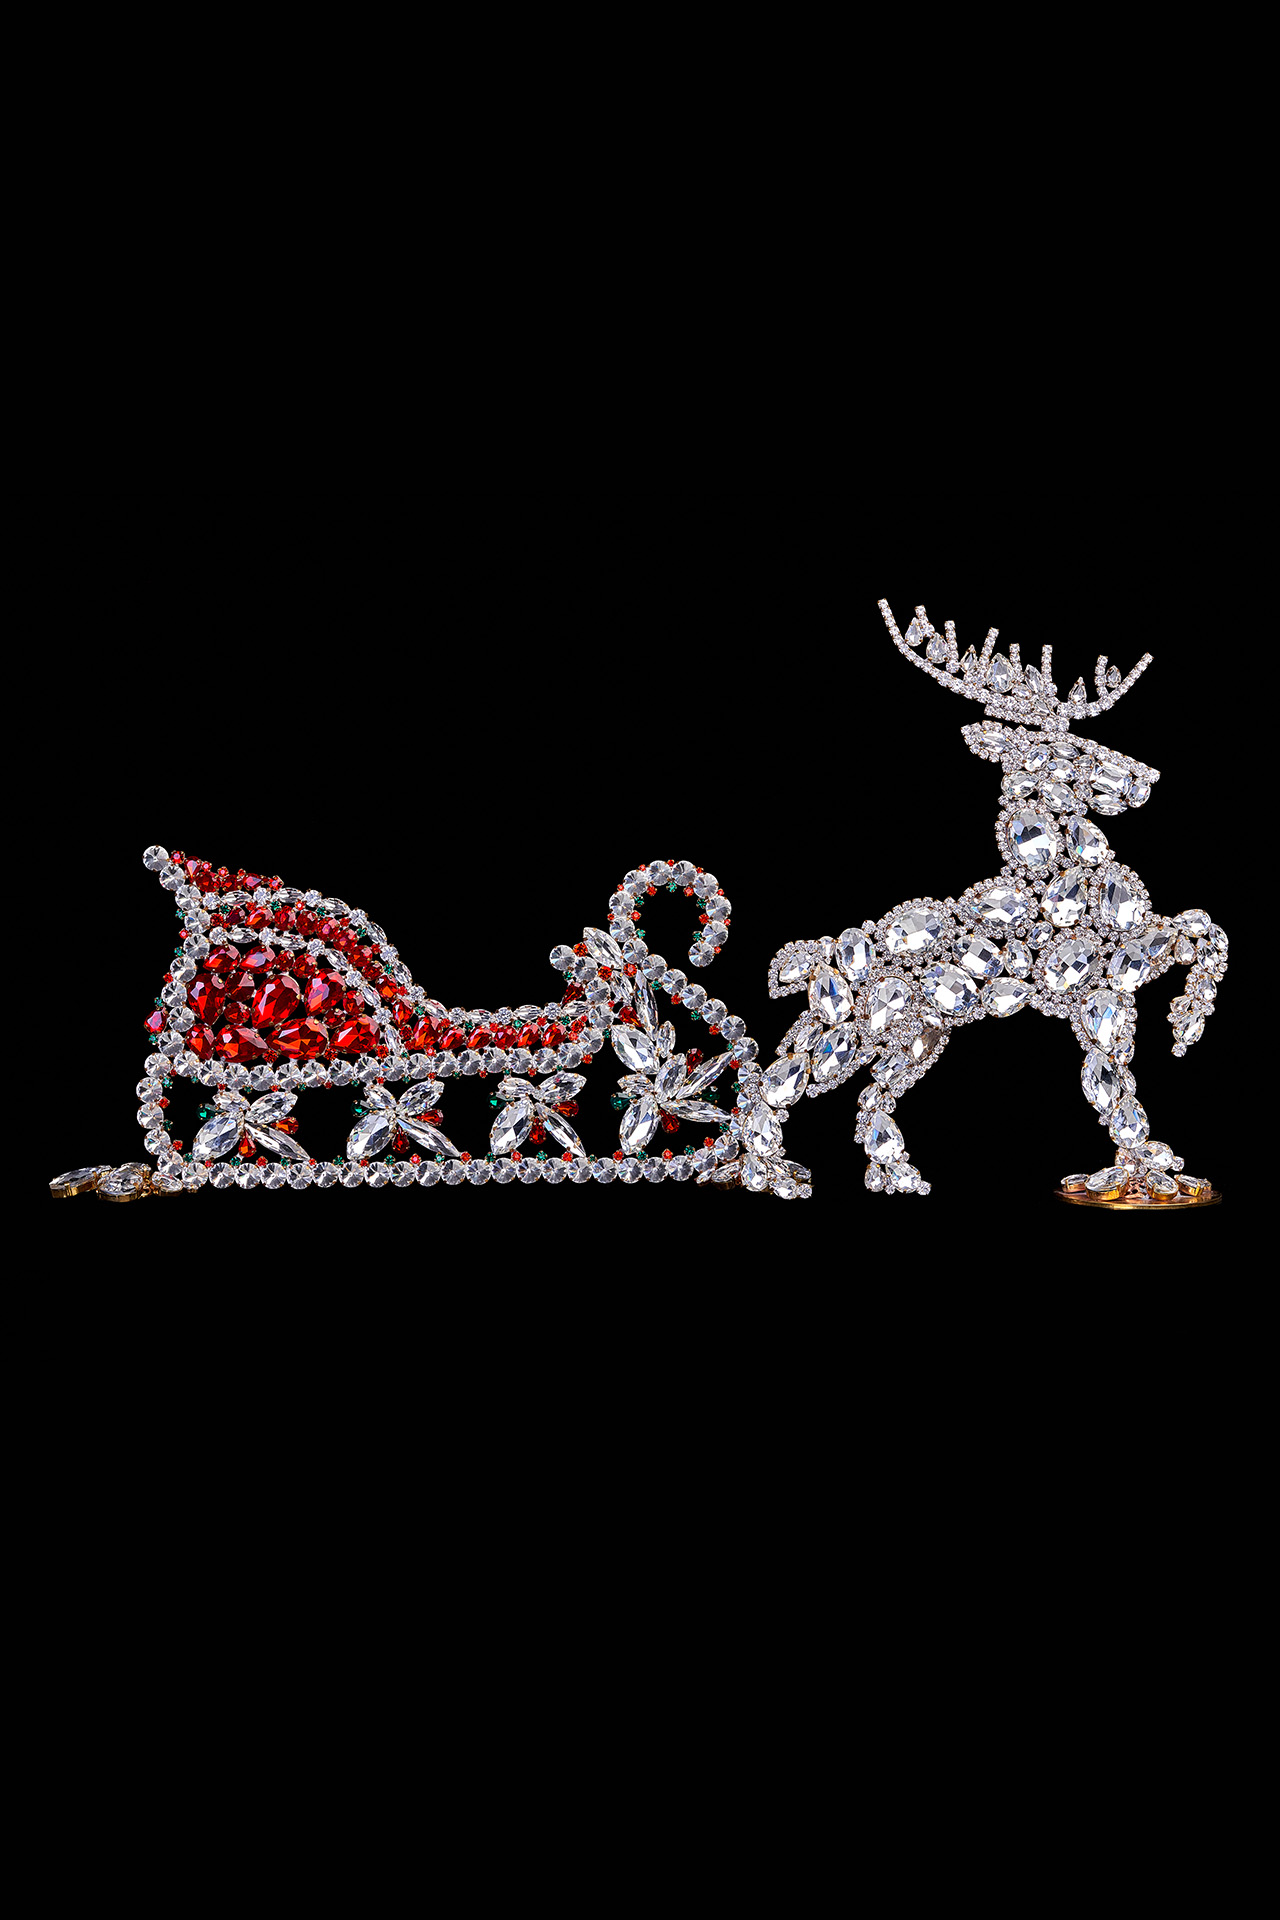 Czech handmade Christmas decoration of reindeer with sleigh